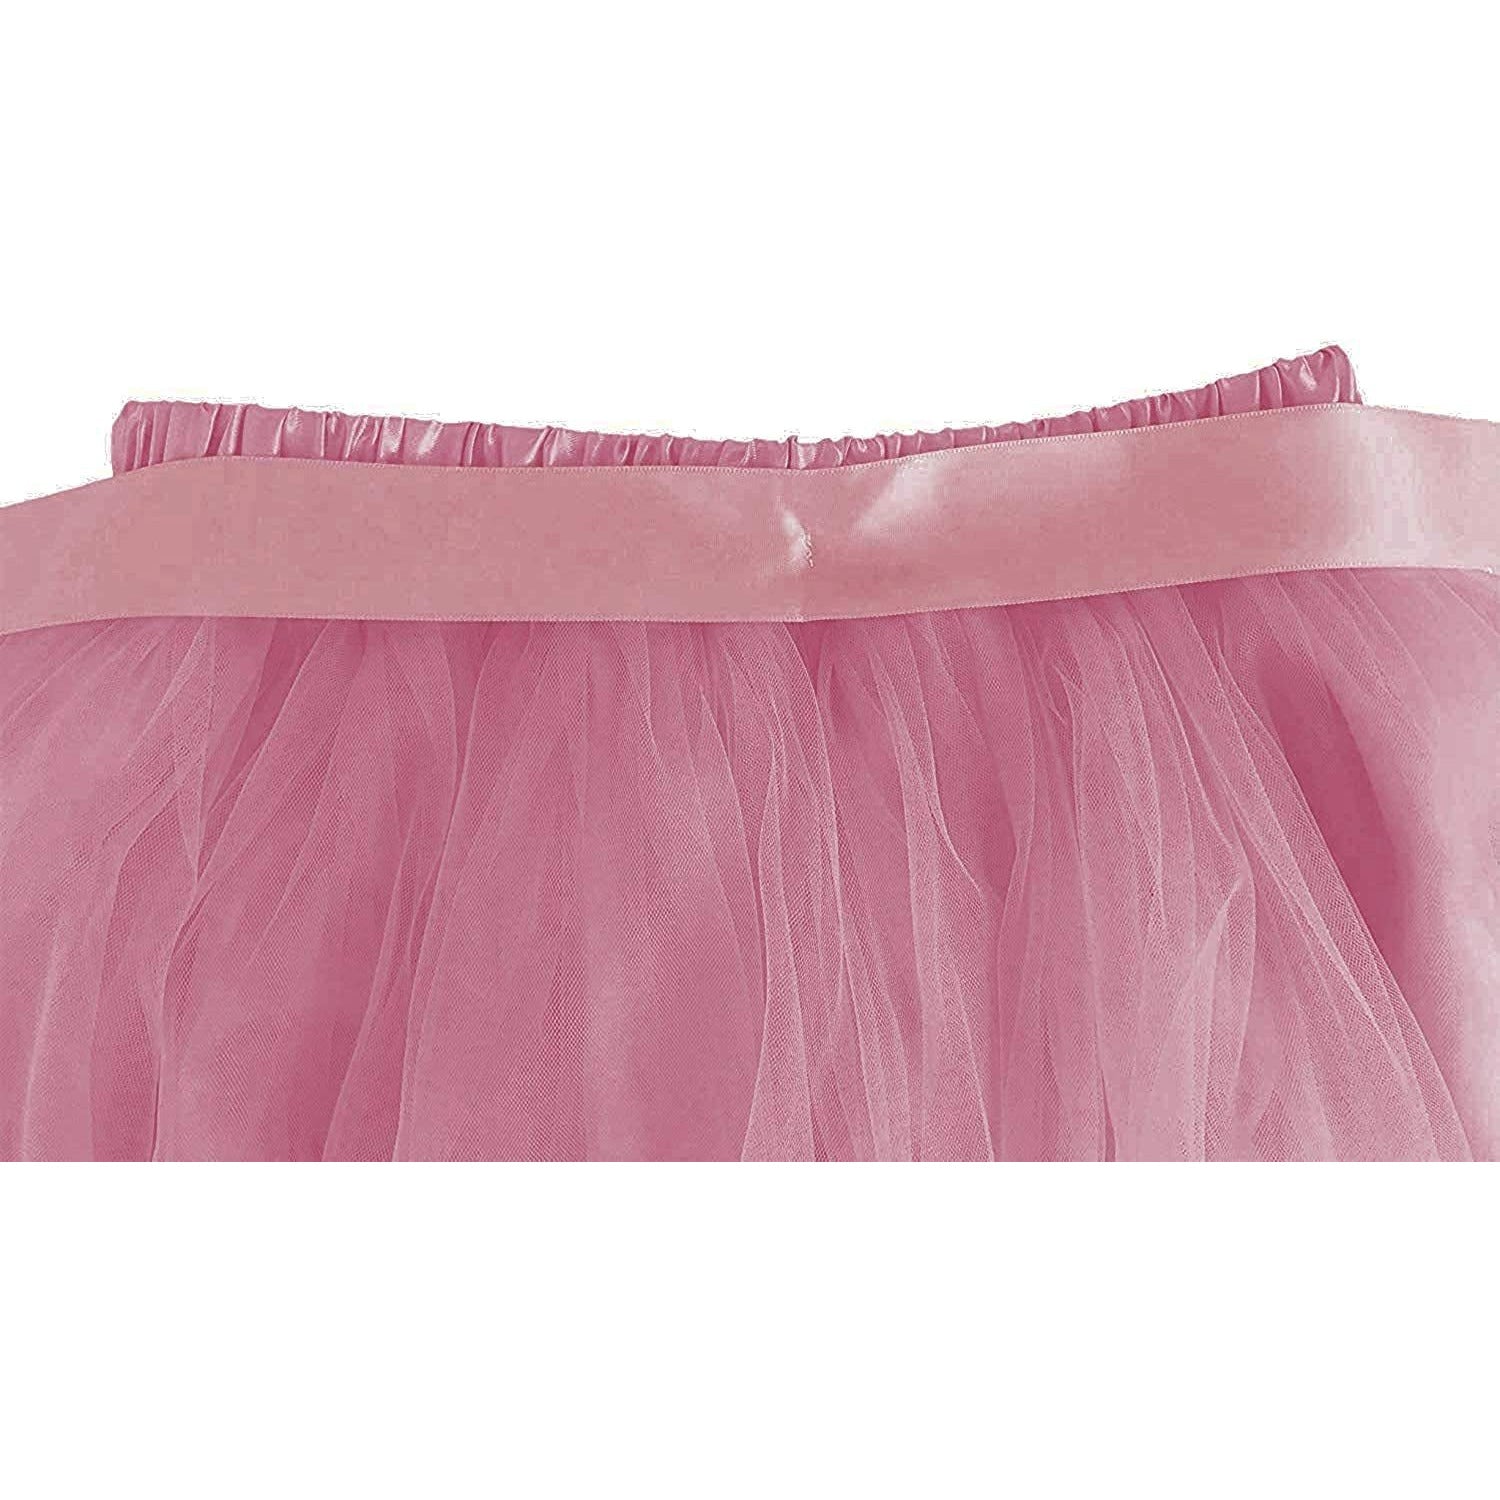 Dancina Women's A-Line Tea Length Midi Tulle Skirt - Regular and Plus Size